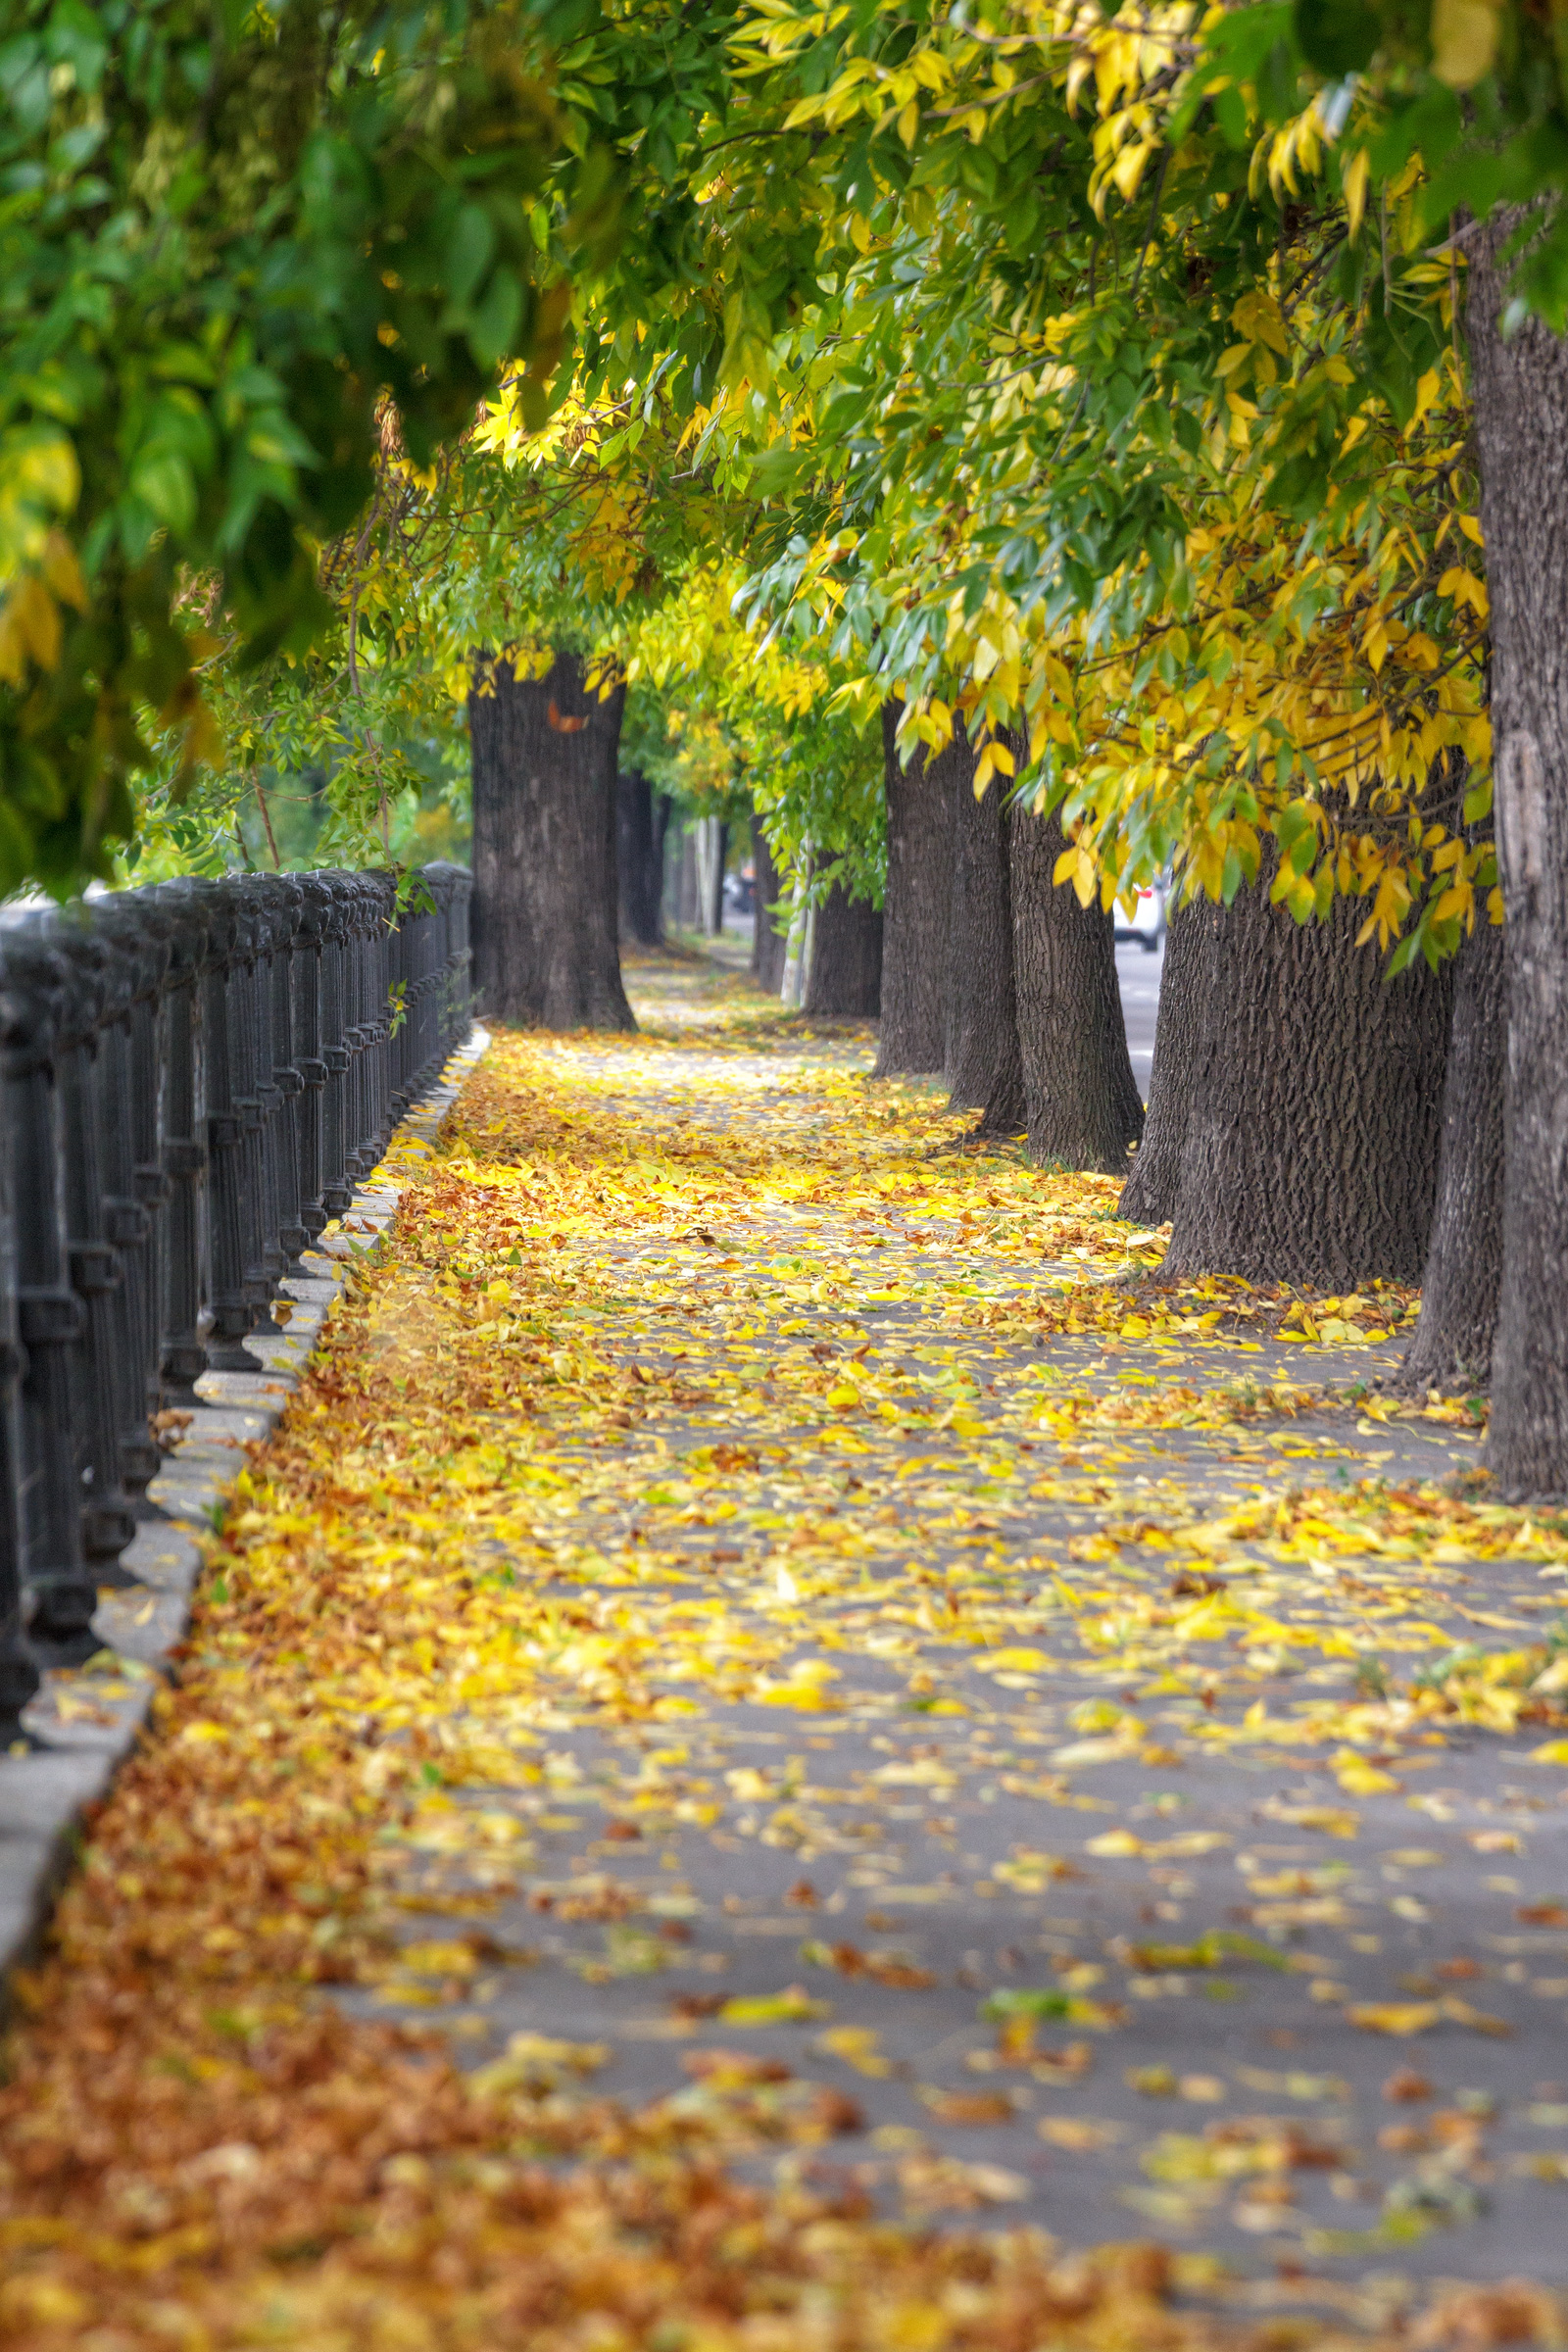 Leaf covered sidewalk in a city